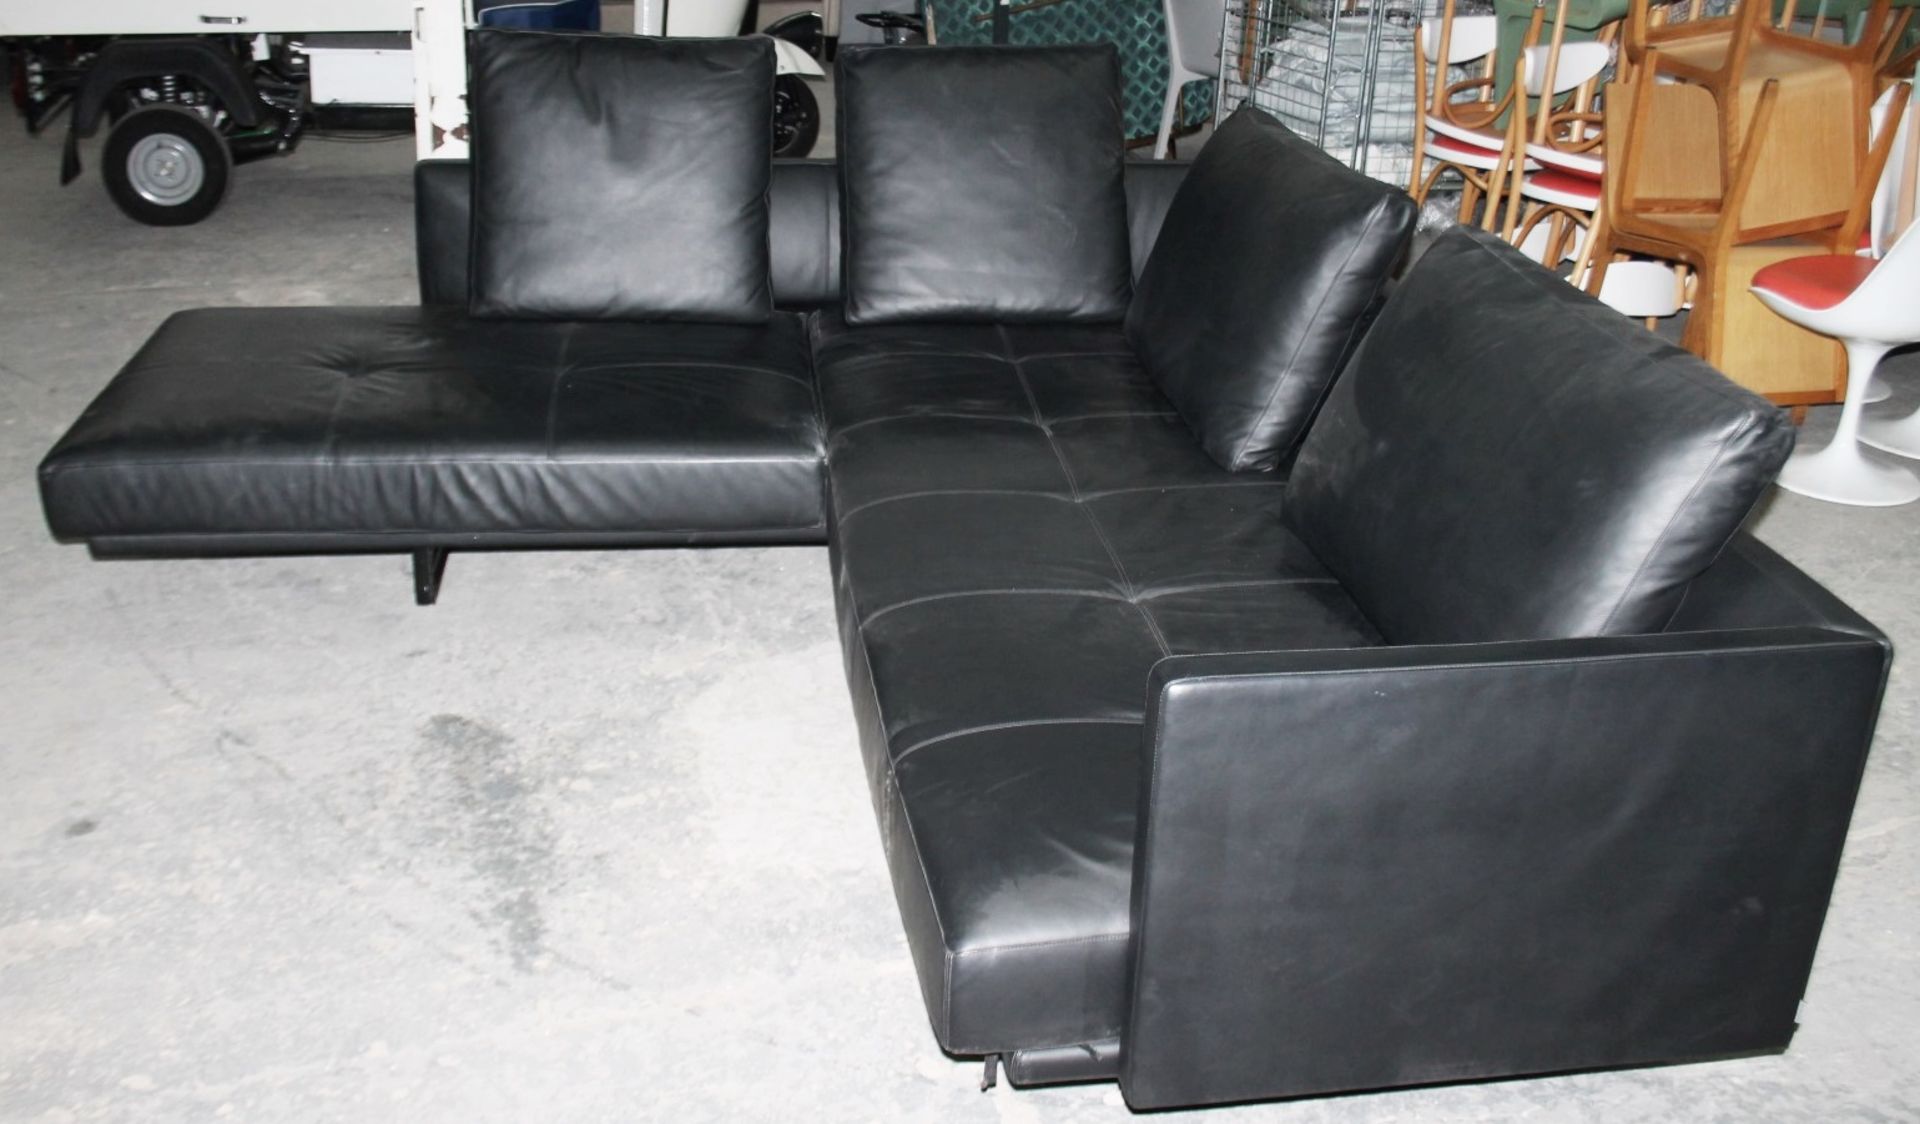 1 x WALTER KNOLL Designer Corner Sofa, Upholstered In A Soft Black Leather - Image 2 of 11